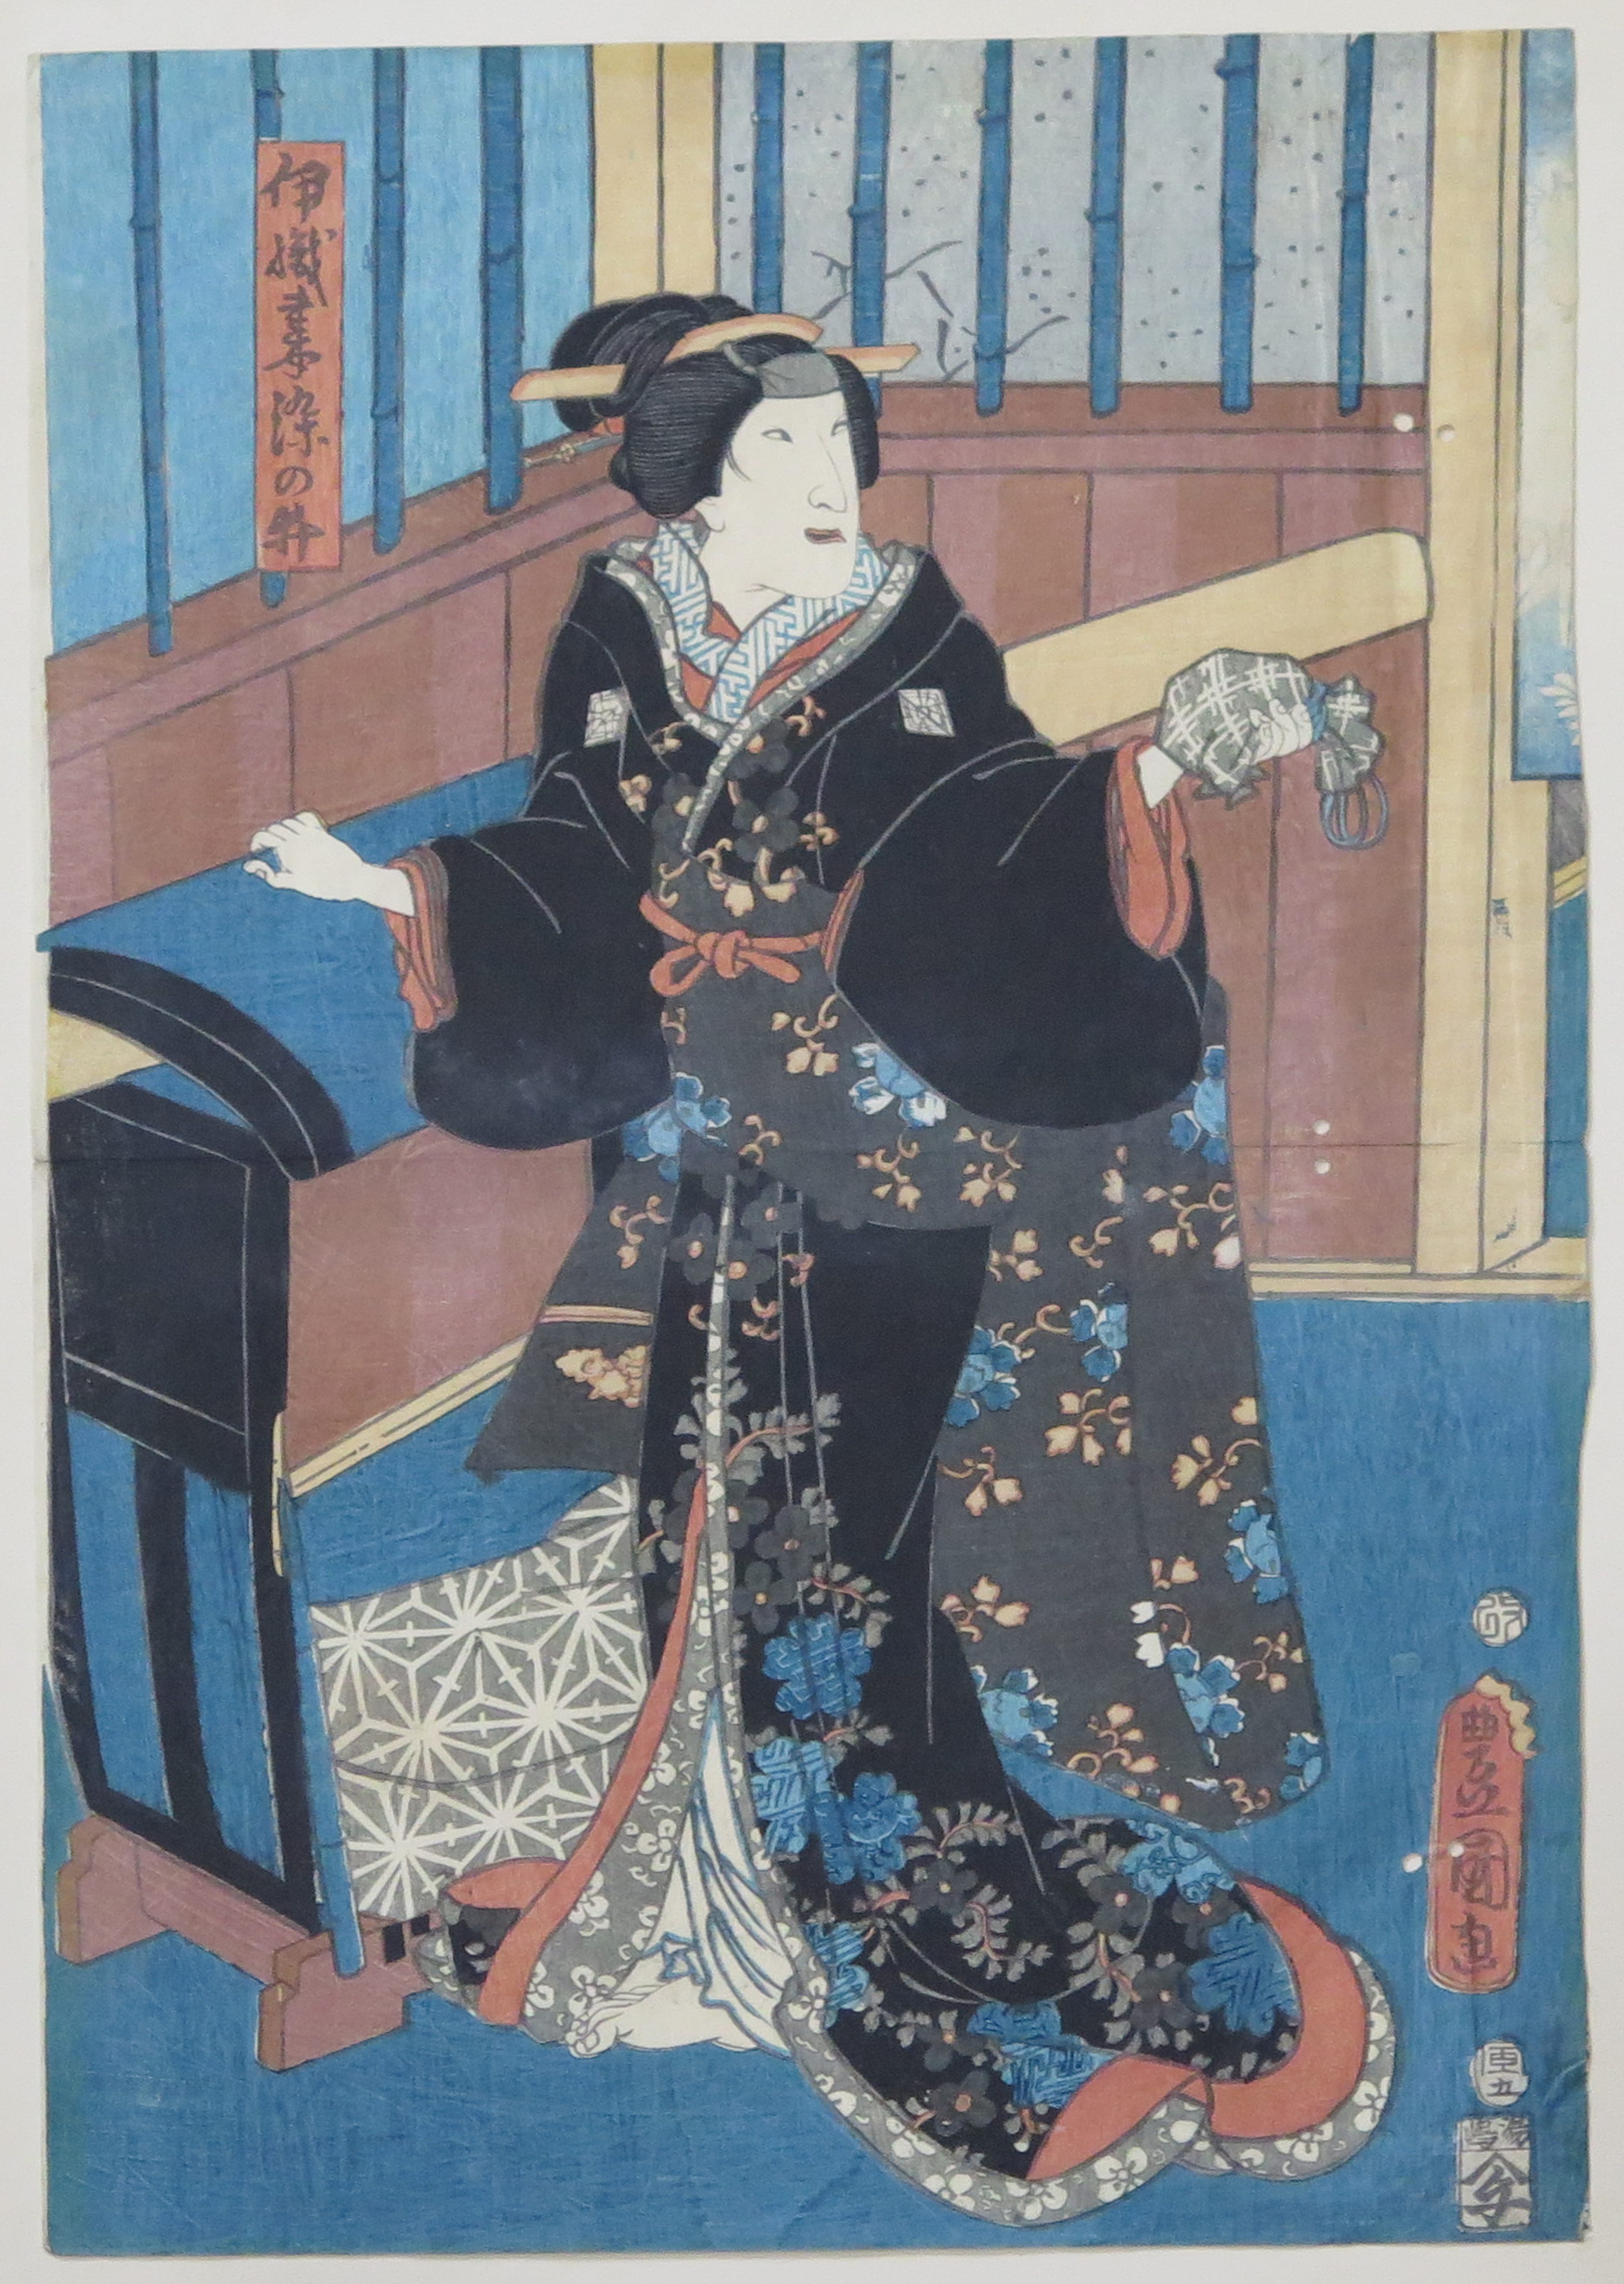 Lot 065: Grp: 2 19th c. Japanese Woodblock Prints Kunisada